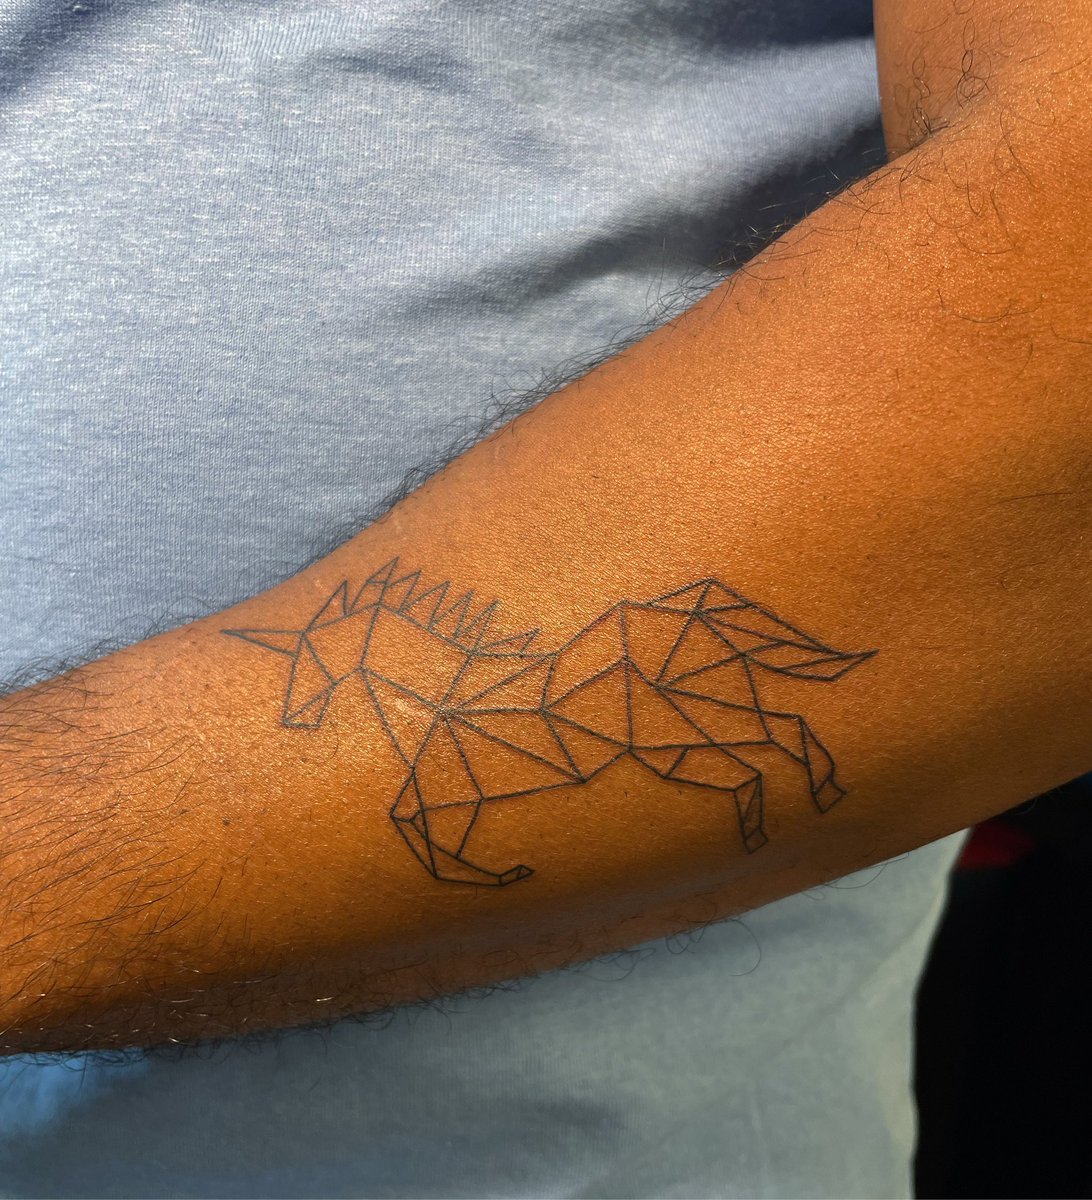 Lil geometric dude for Jamail the other day. 
#UnicornSpotted #tattoo #geometric #radtats #artist